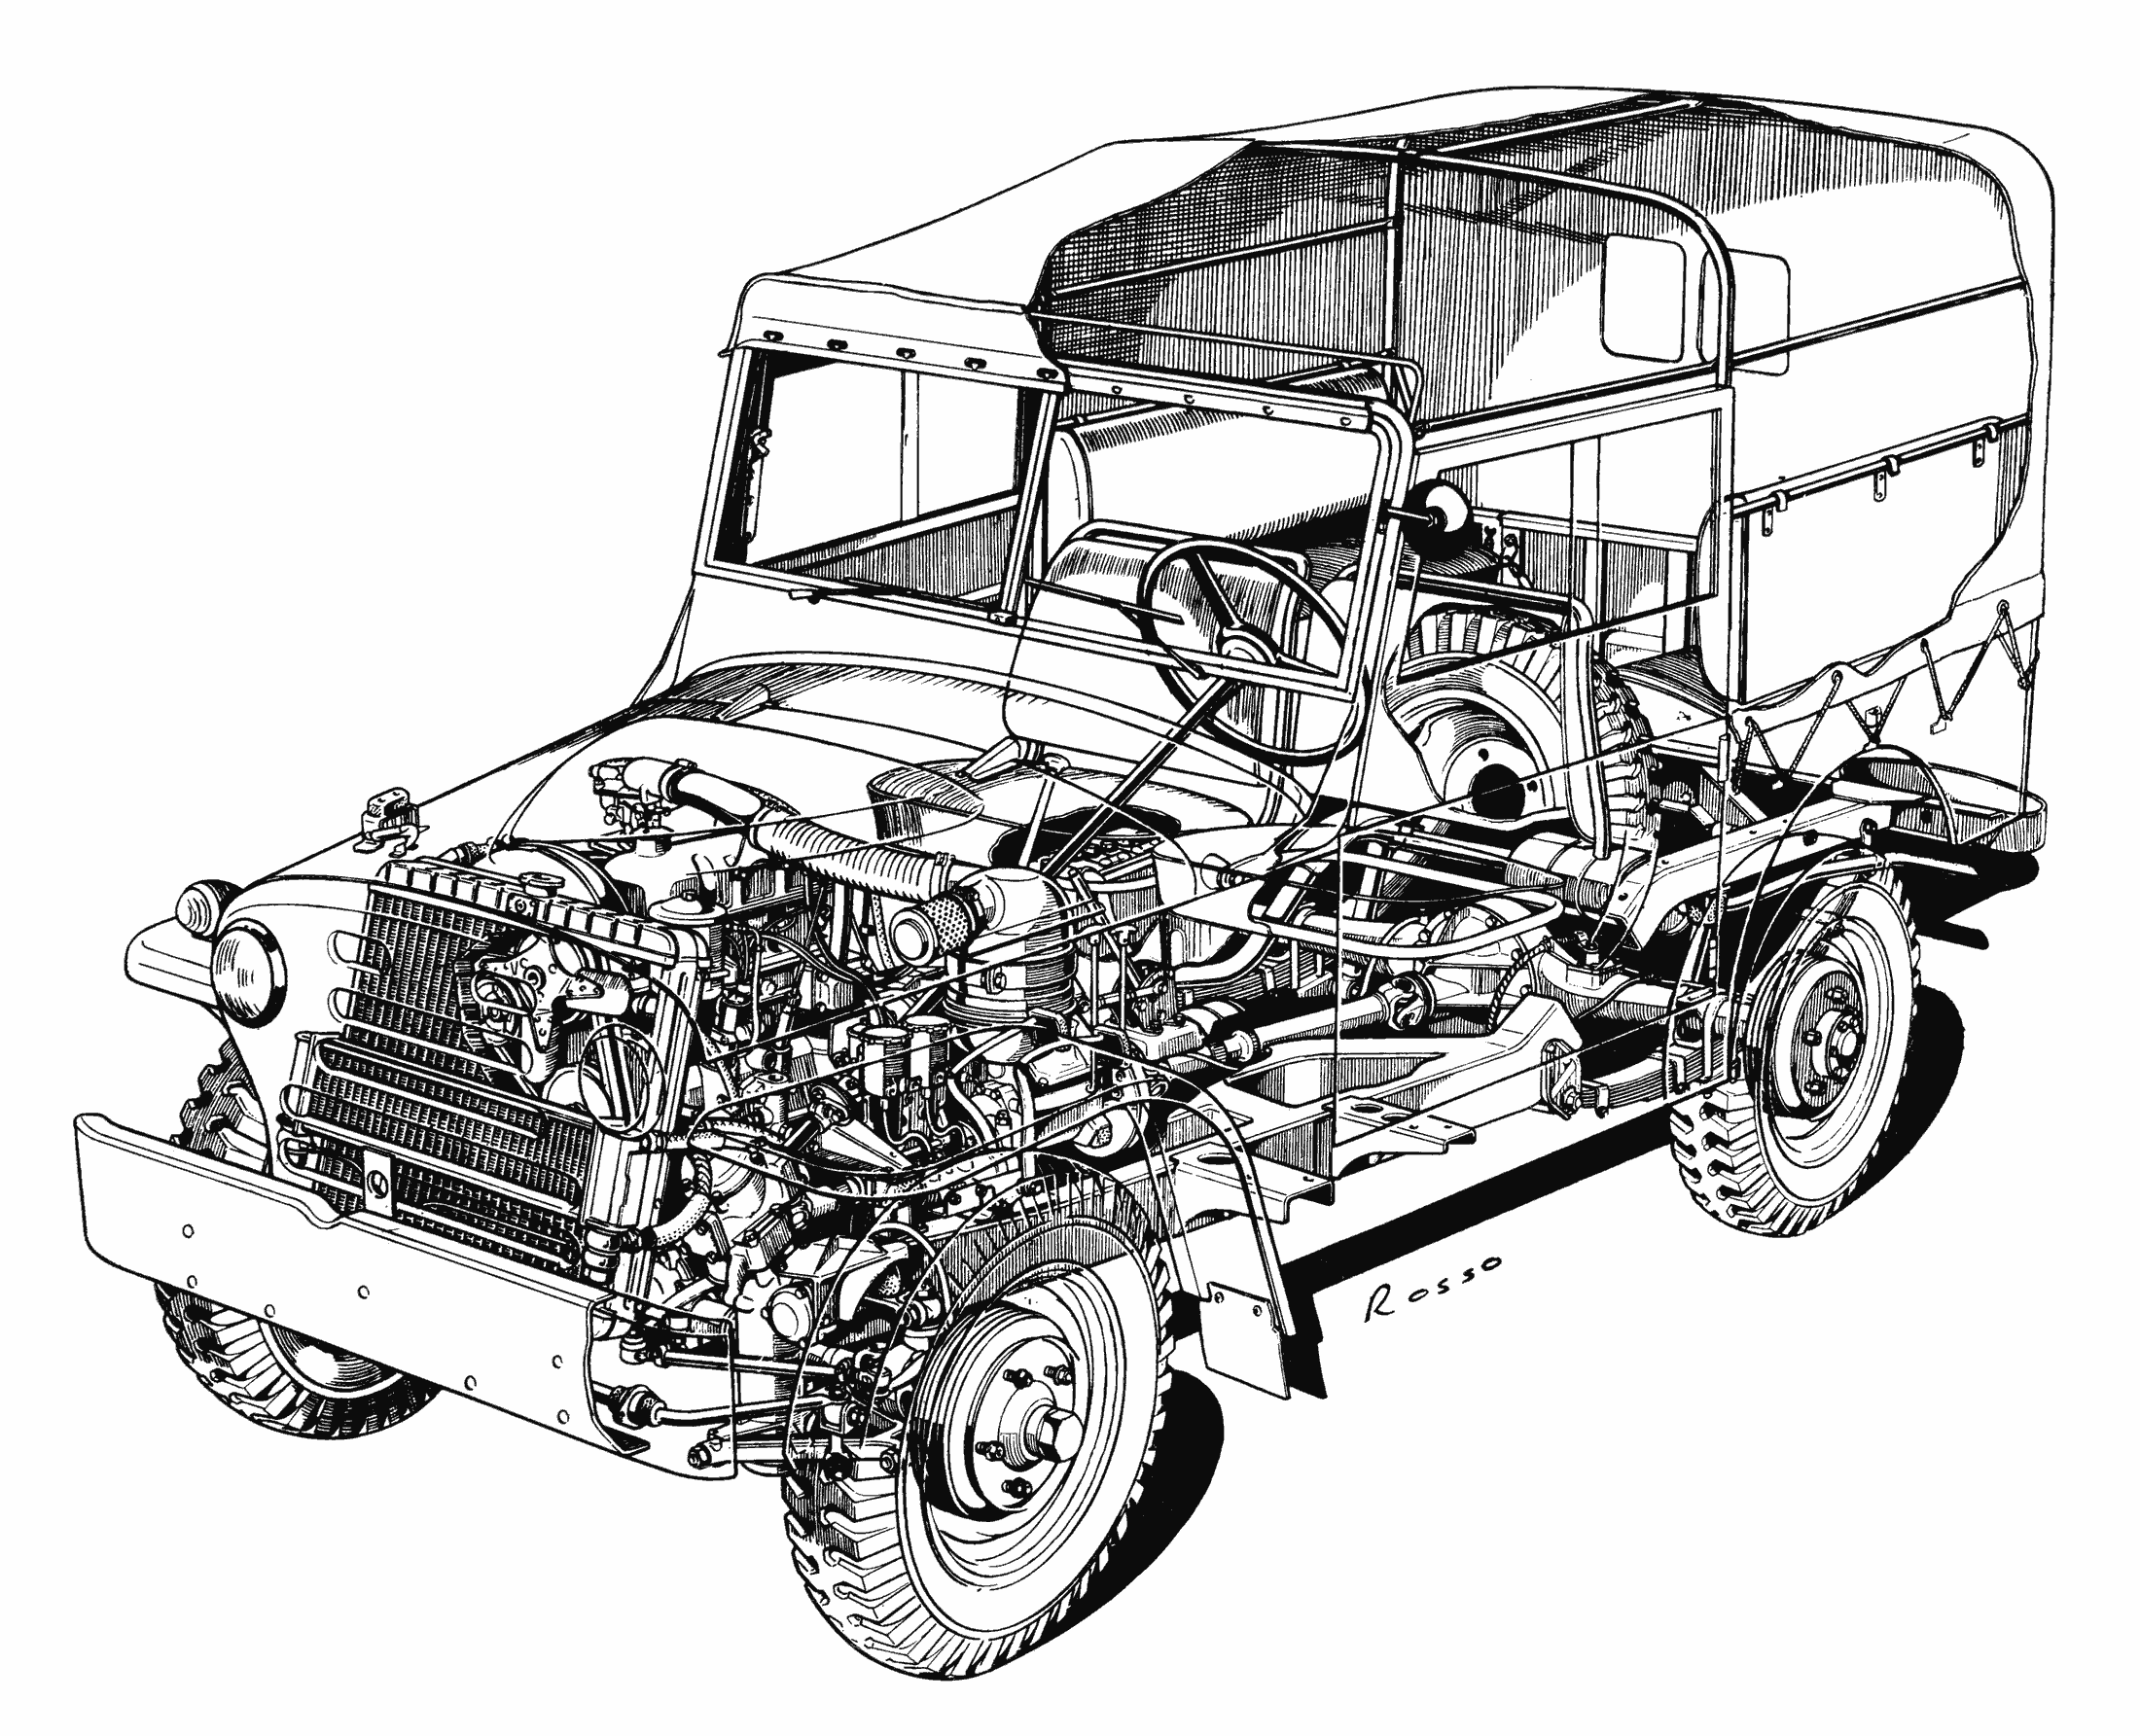 Fiat Campagnola cutaway